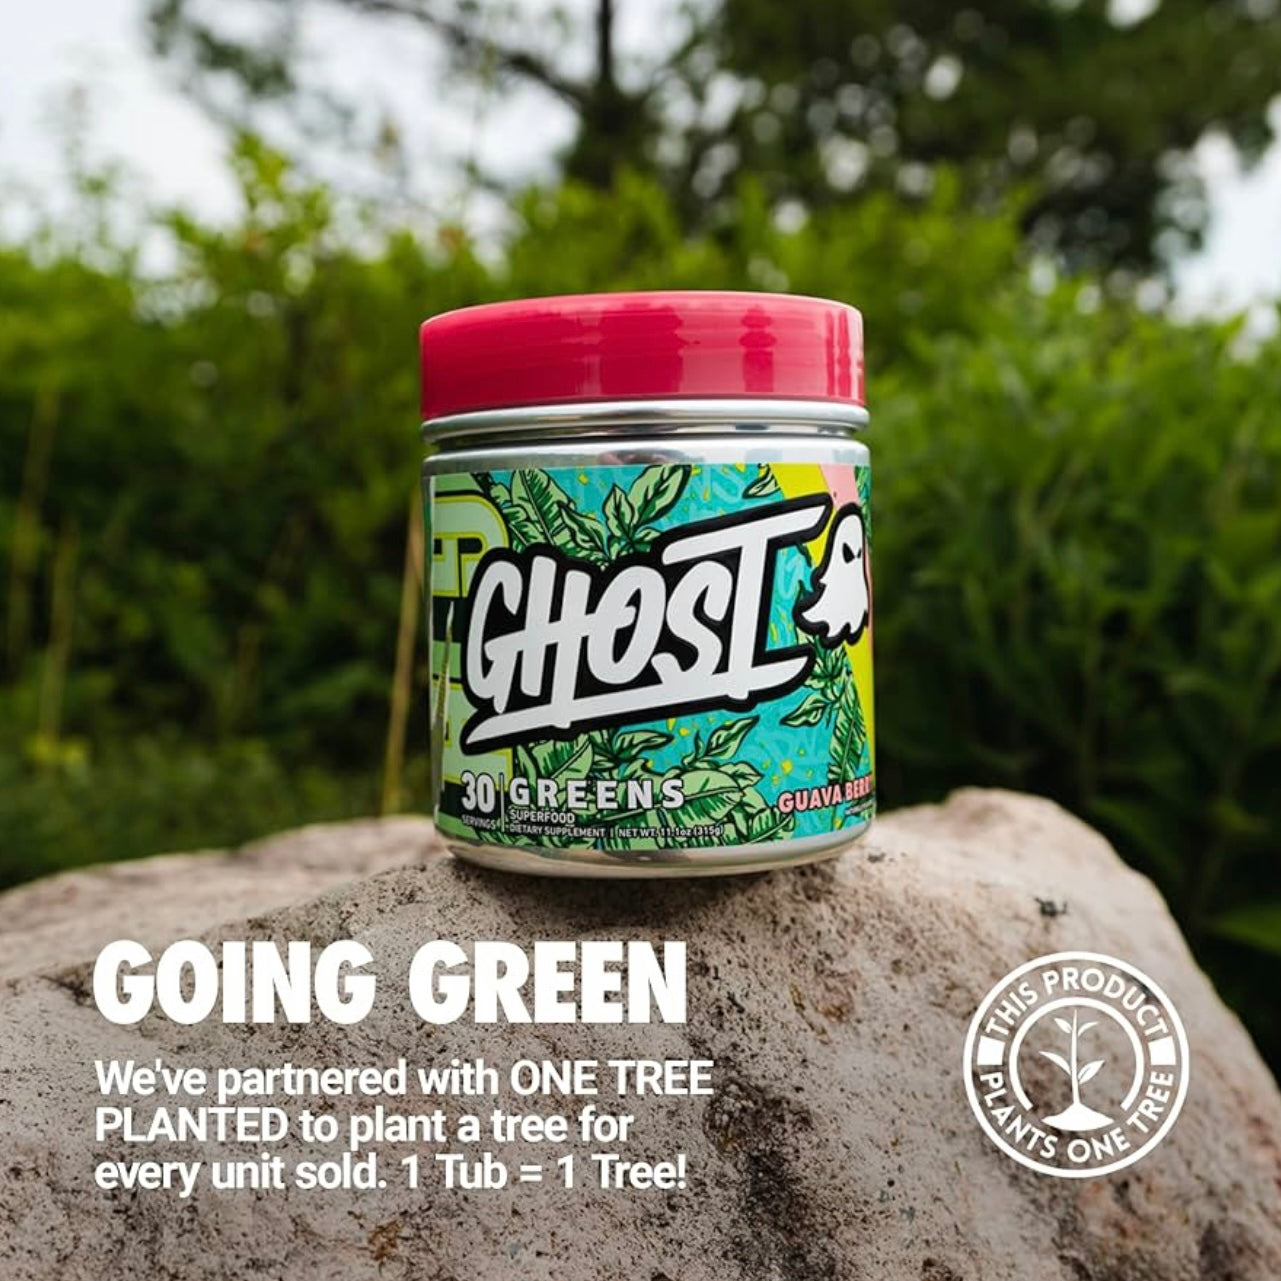 GHOST Greens Superfood Powder, Lime - 30 Servings